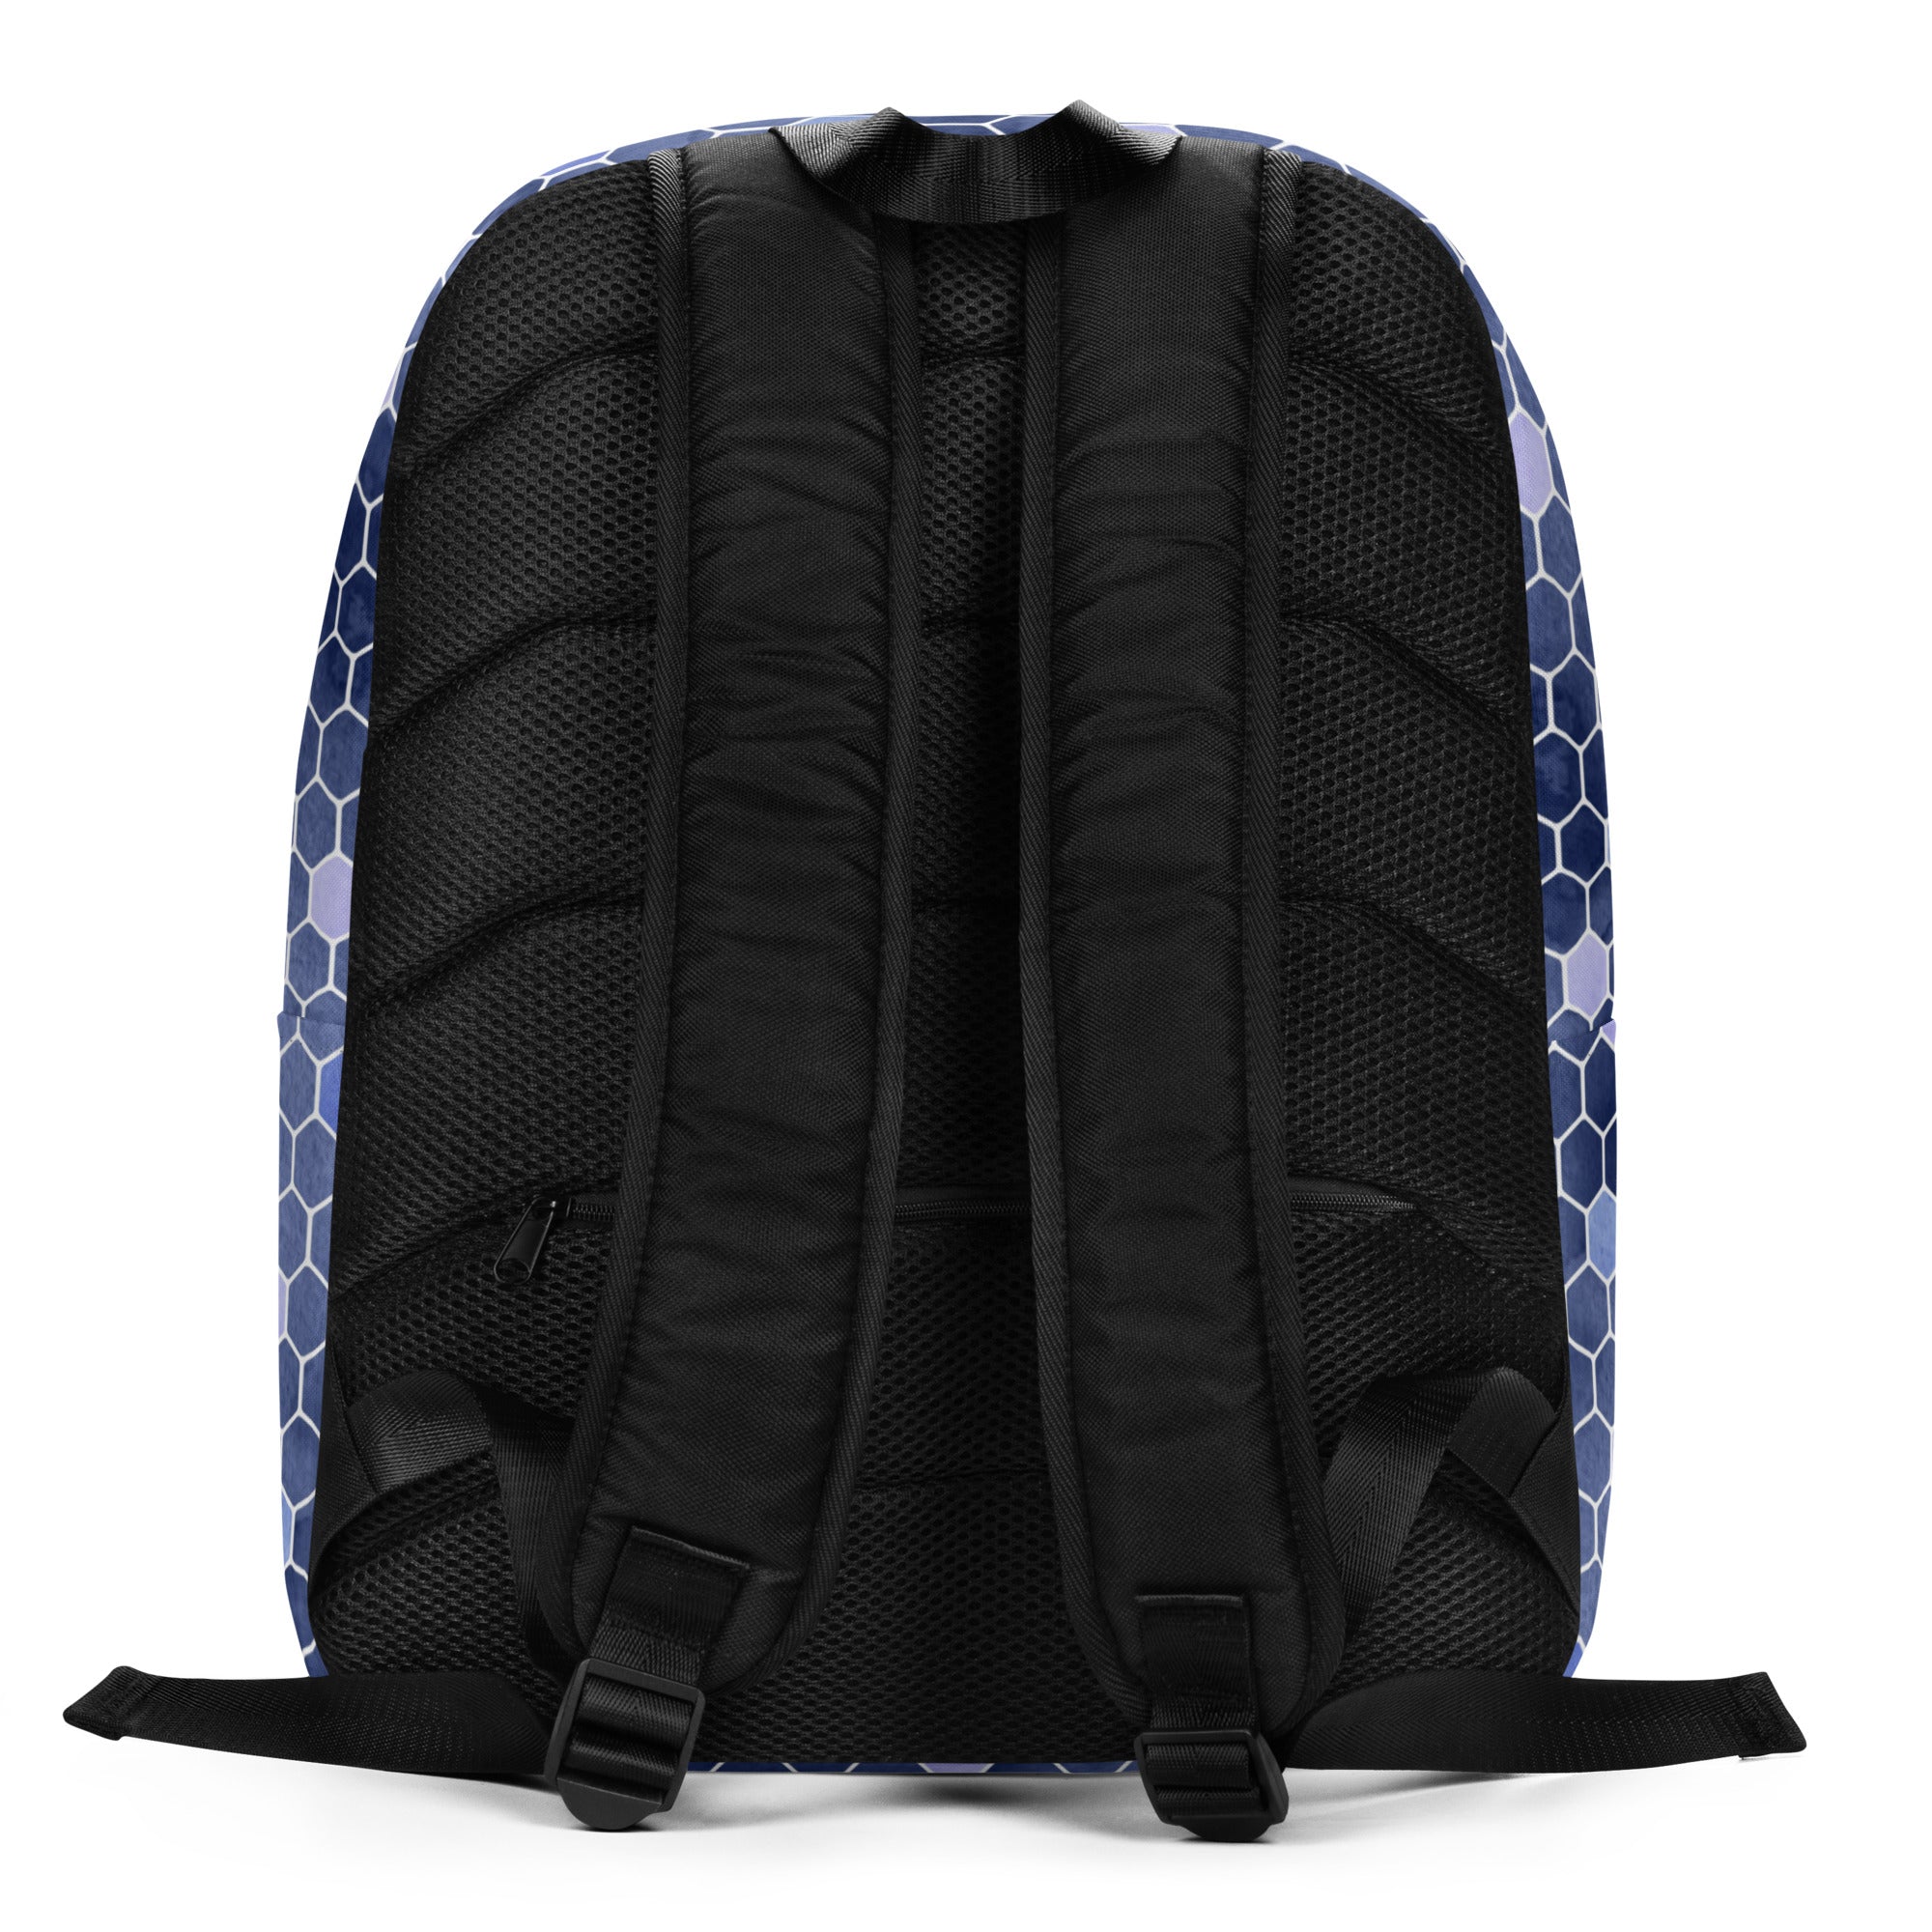 Minimalist Backpack- Honeycomb Blue